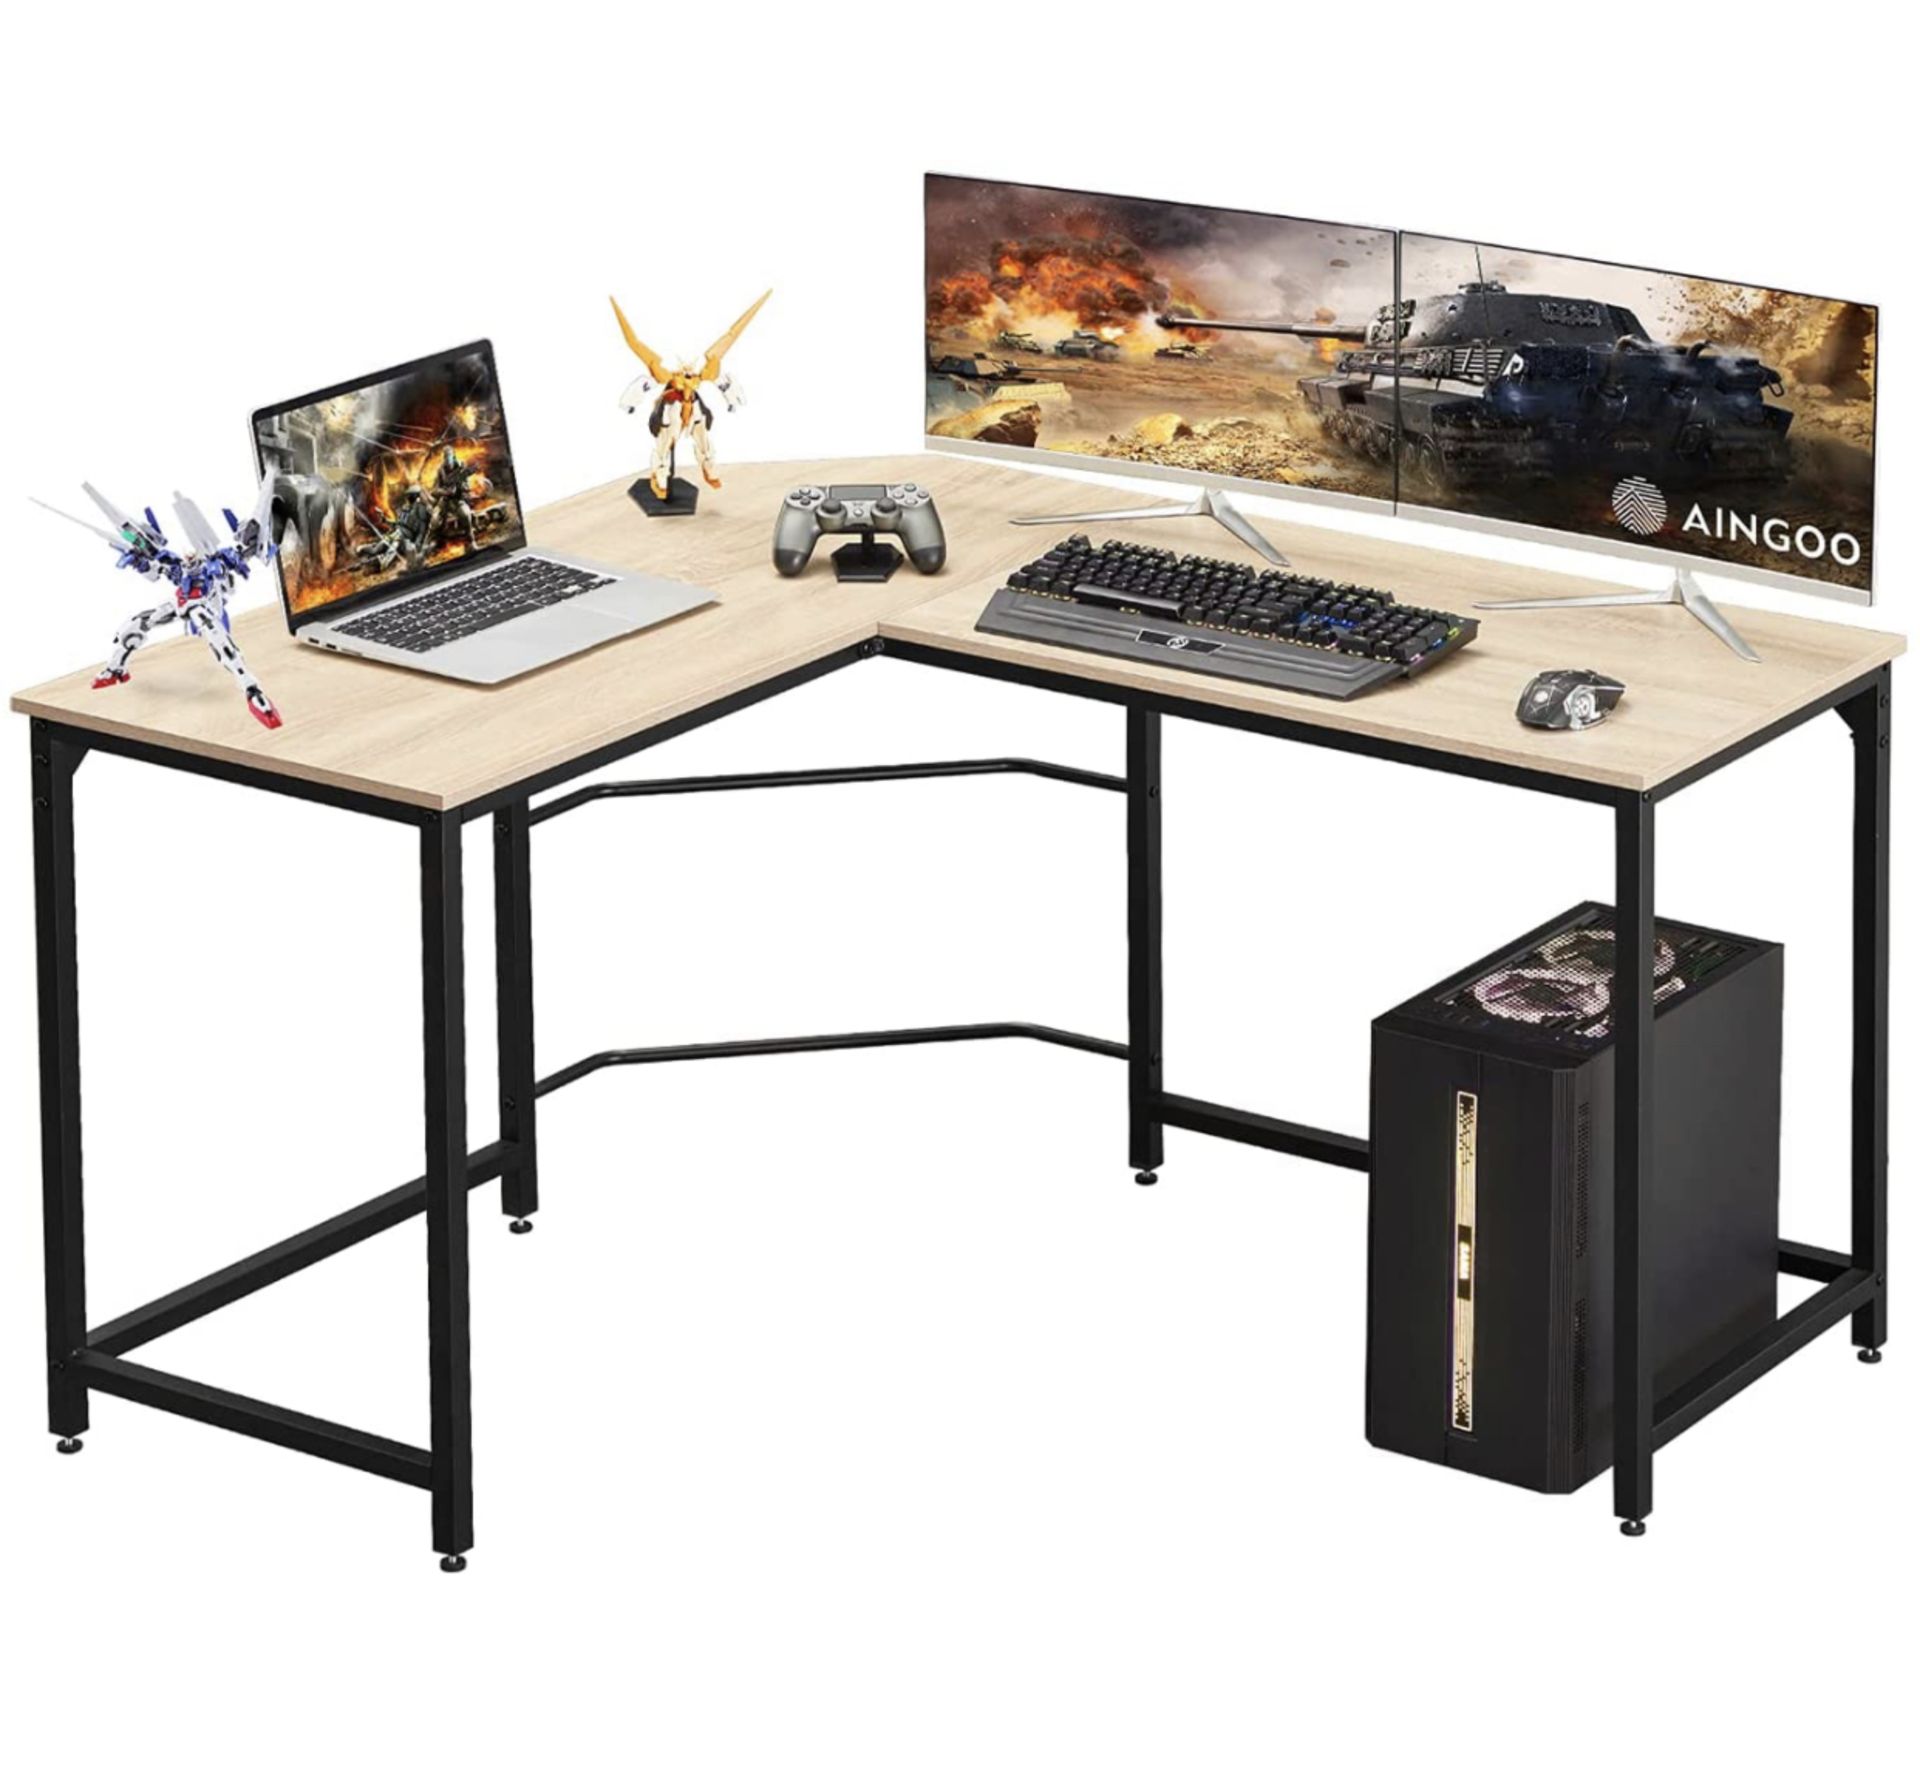 Aingoo Corner Desk L Shaped Home Office PC Workstation RRP £85.99